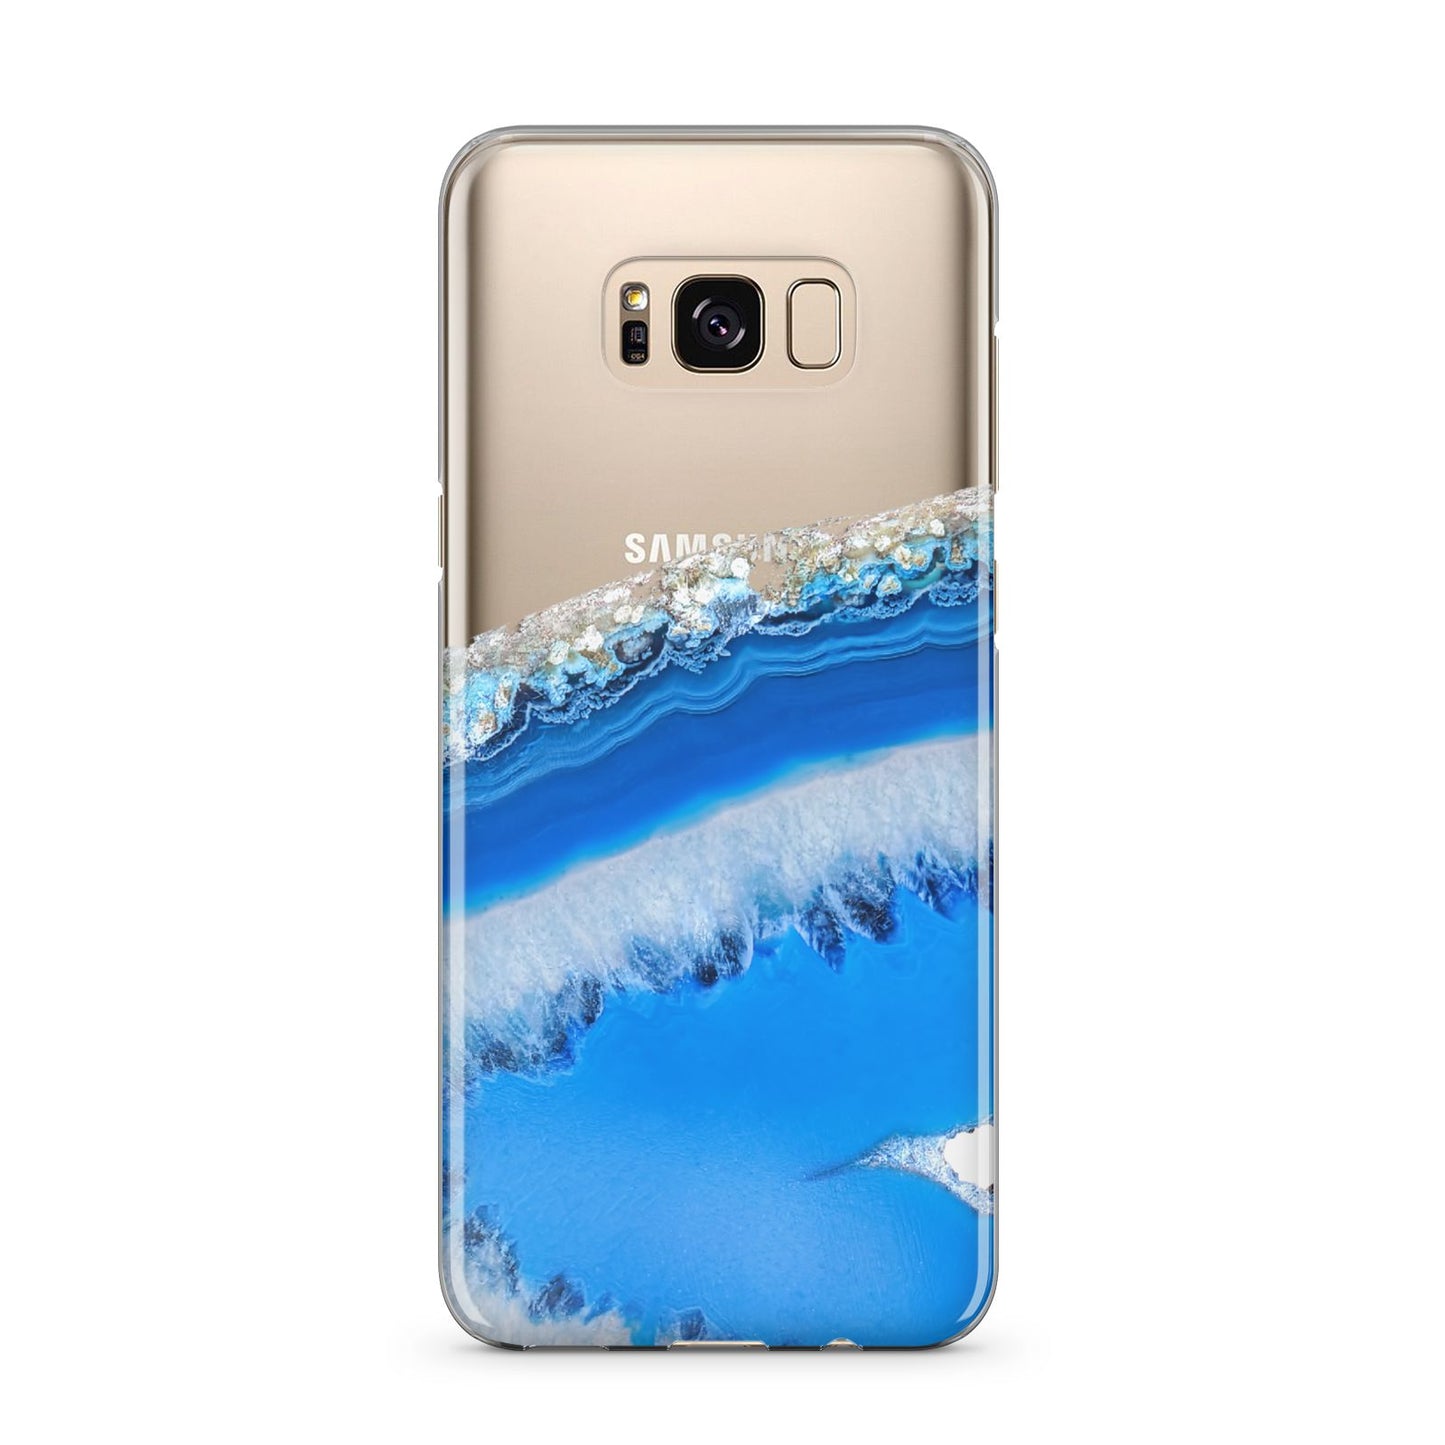 Agate Blue Samsung Galaxy S8 Plus Case